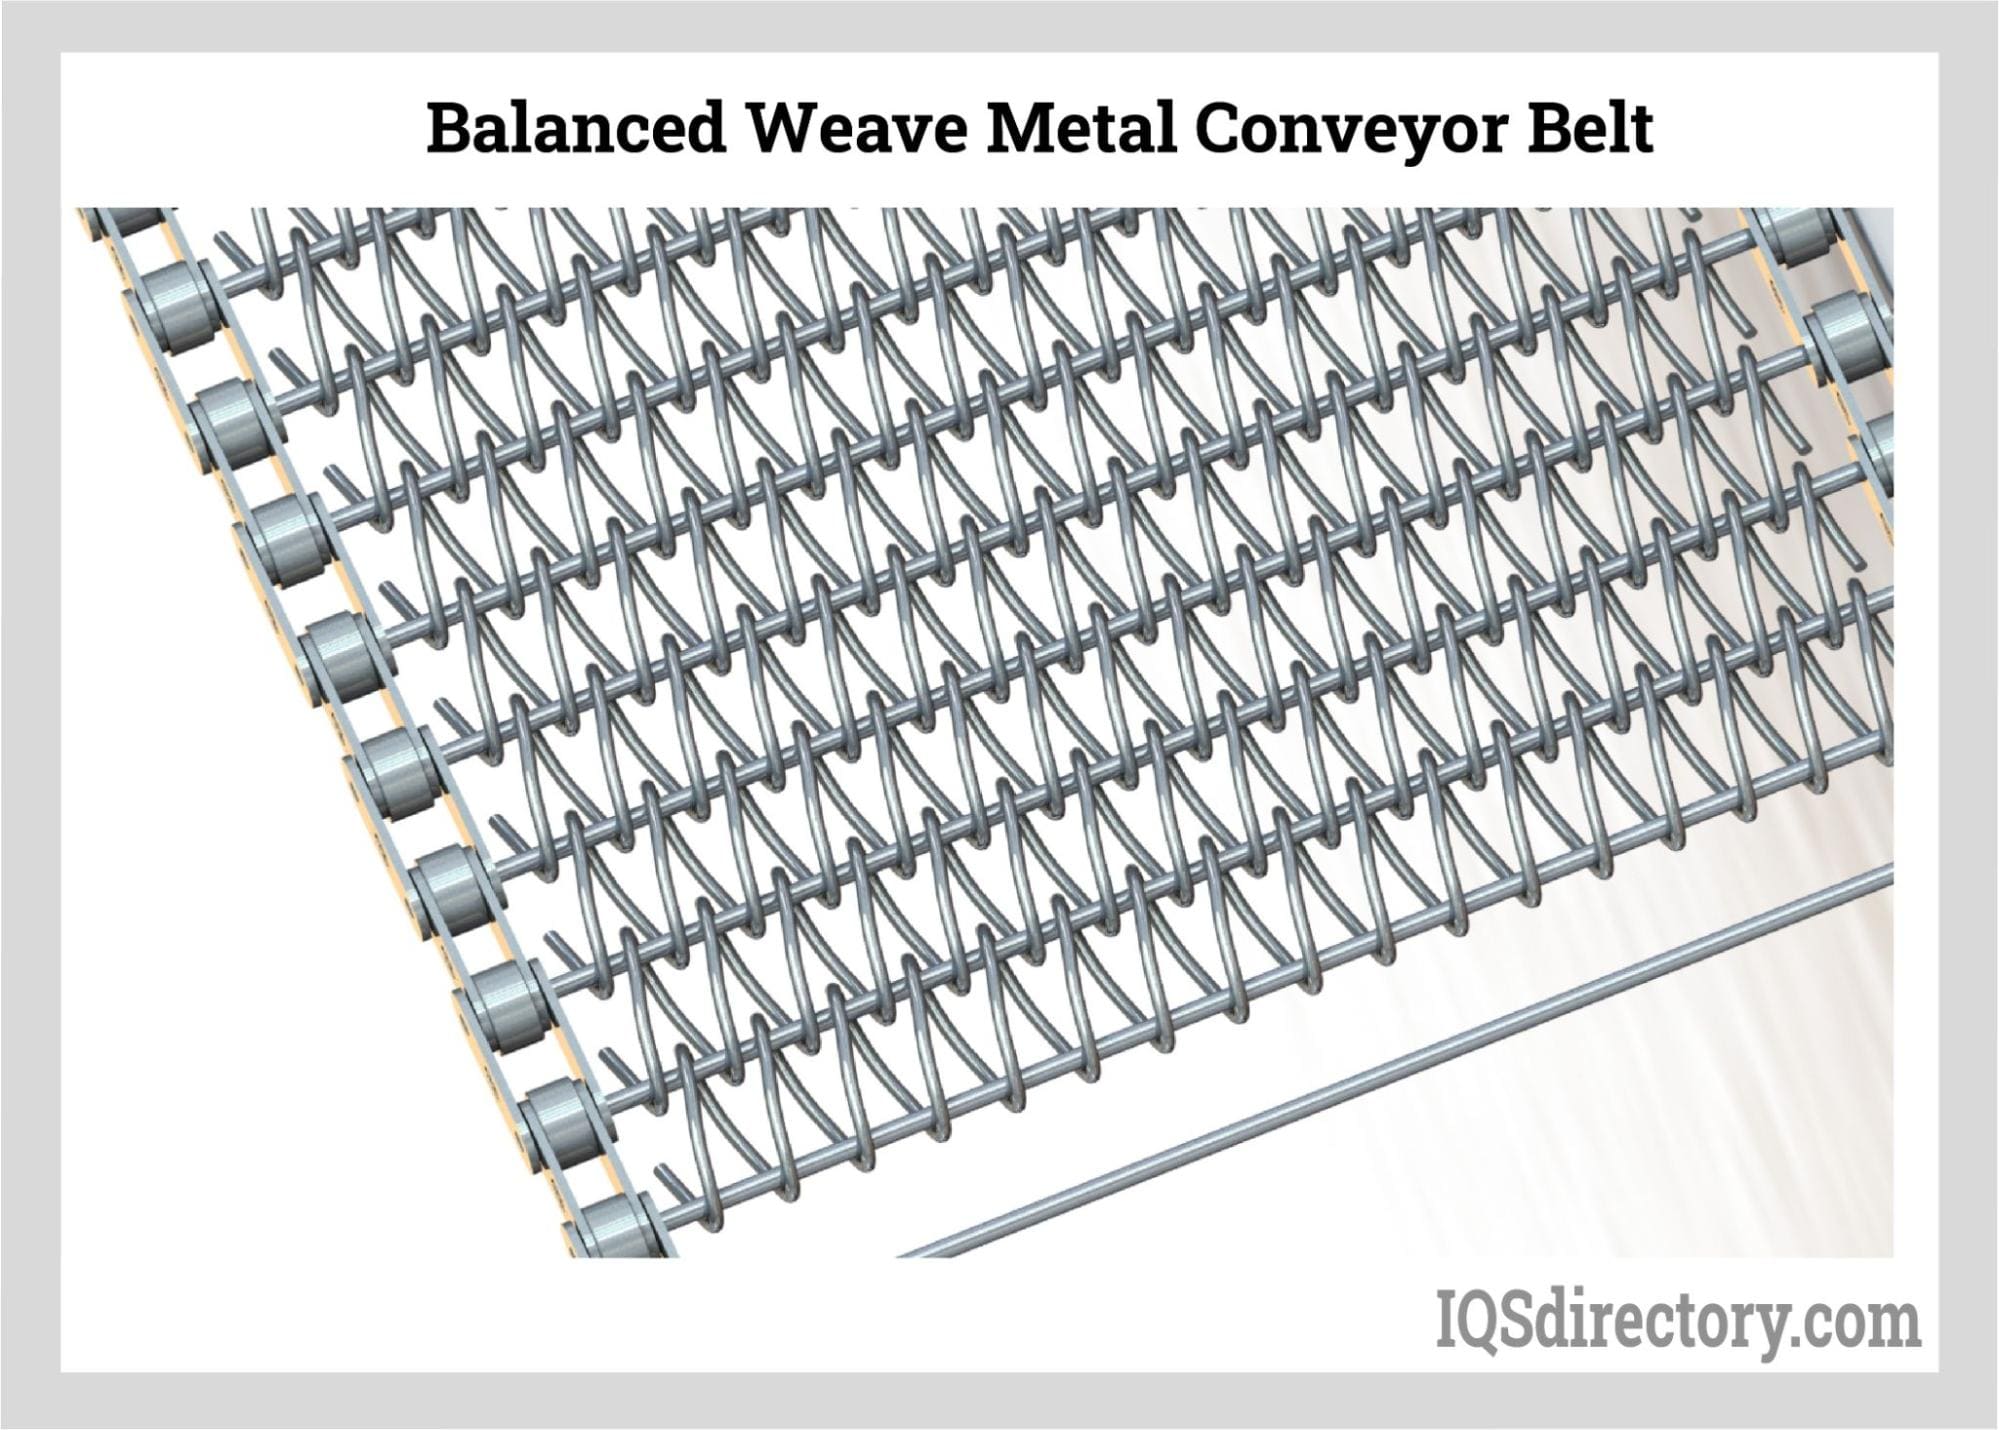 Balanced Weave Metal Conveyor Belt